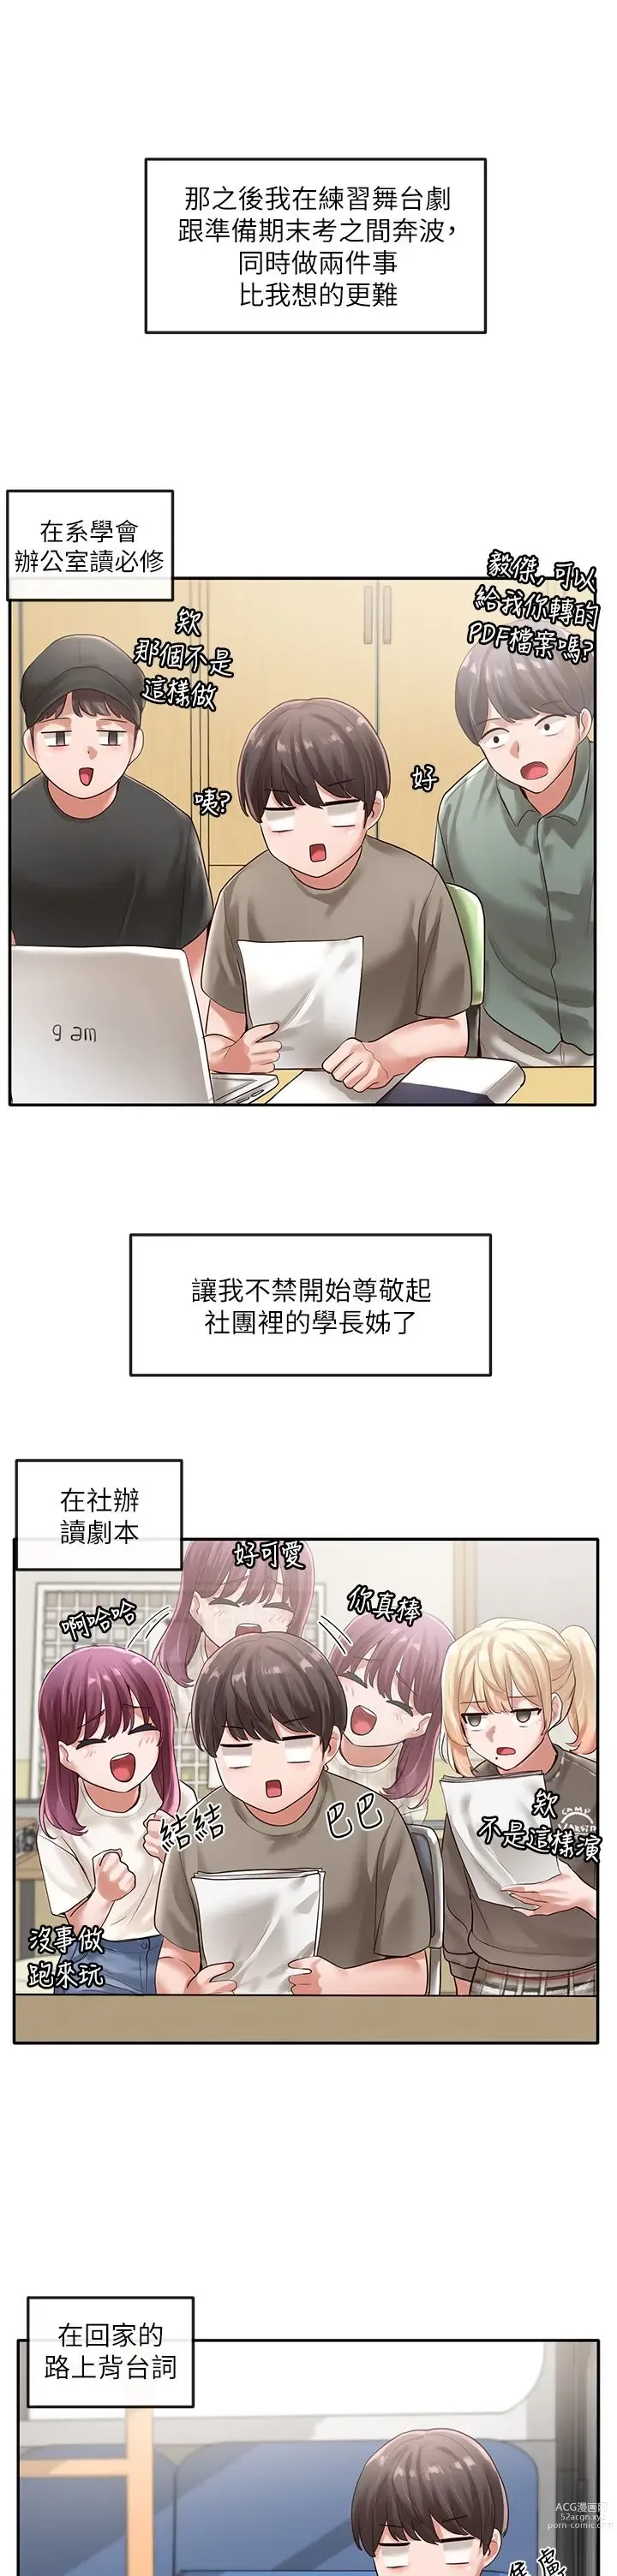 Page 1661 of manga 社团学姐/Circles 1-50